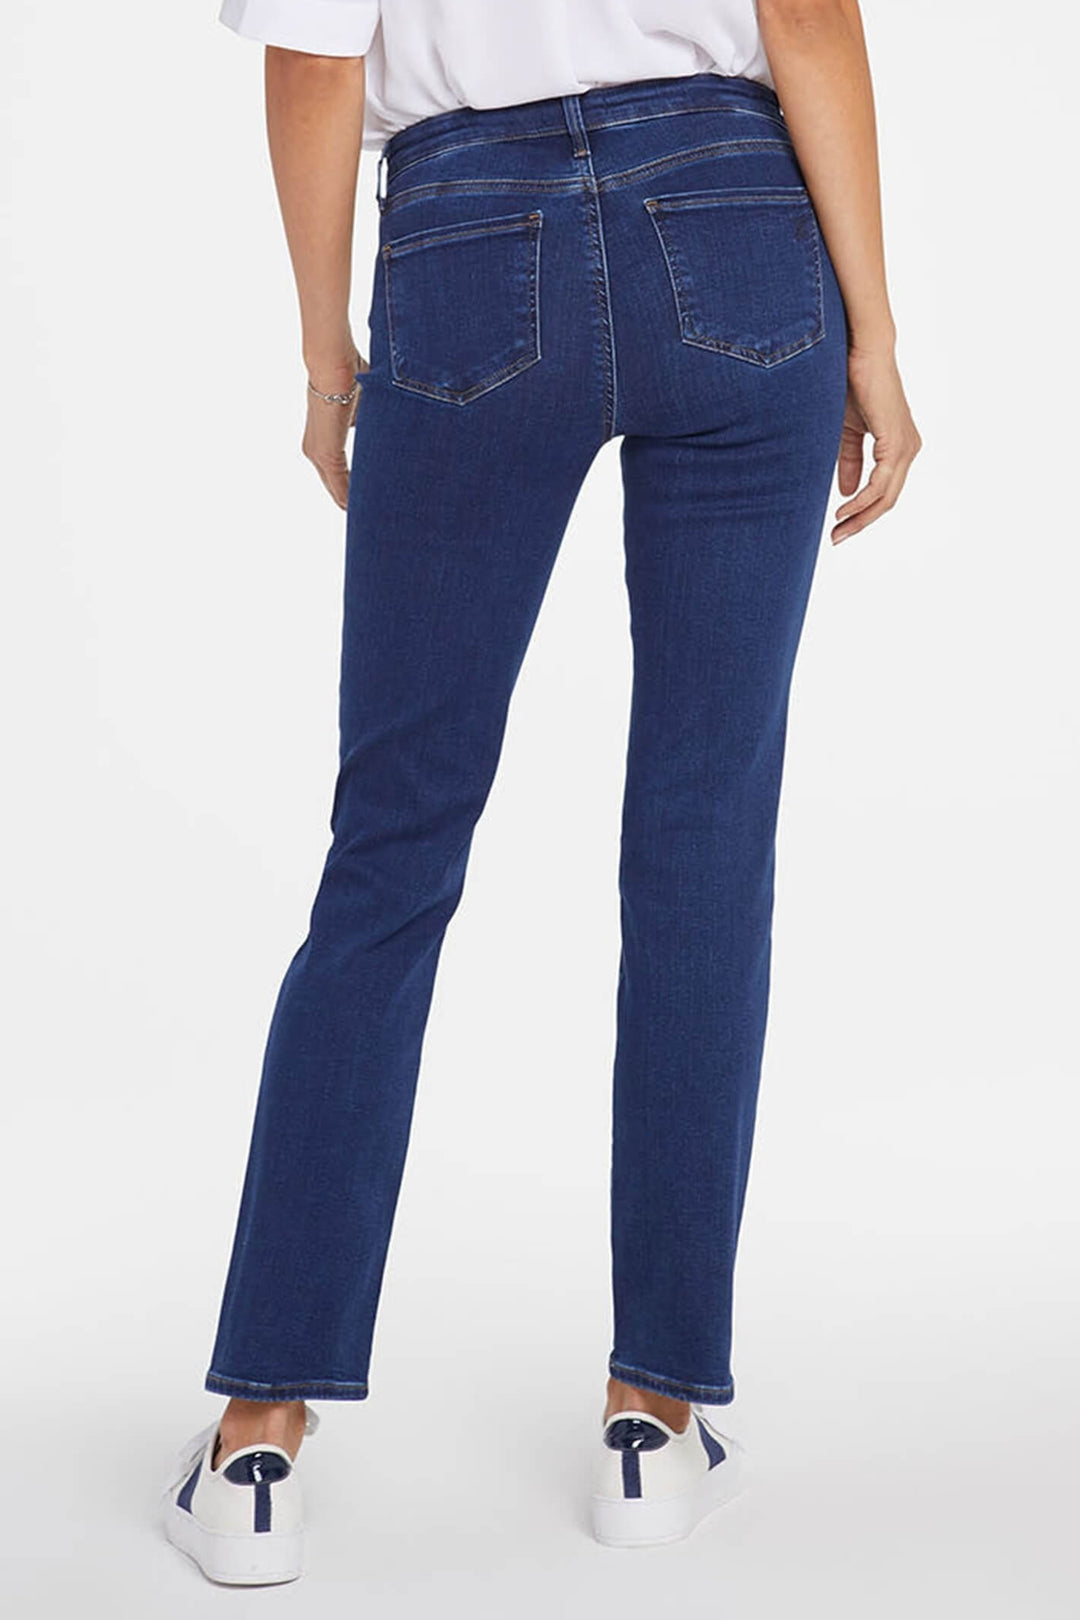 NYDJ MPRISS8518 Sheri Medium Blue Slim Quin Jeans - Shirley Allum Boutique